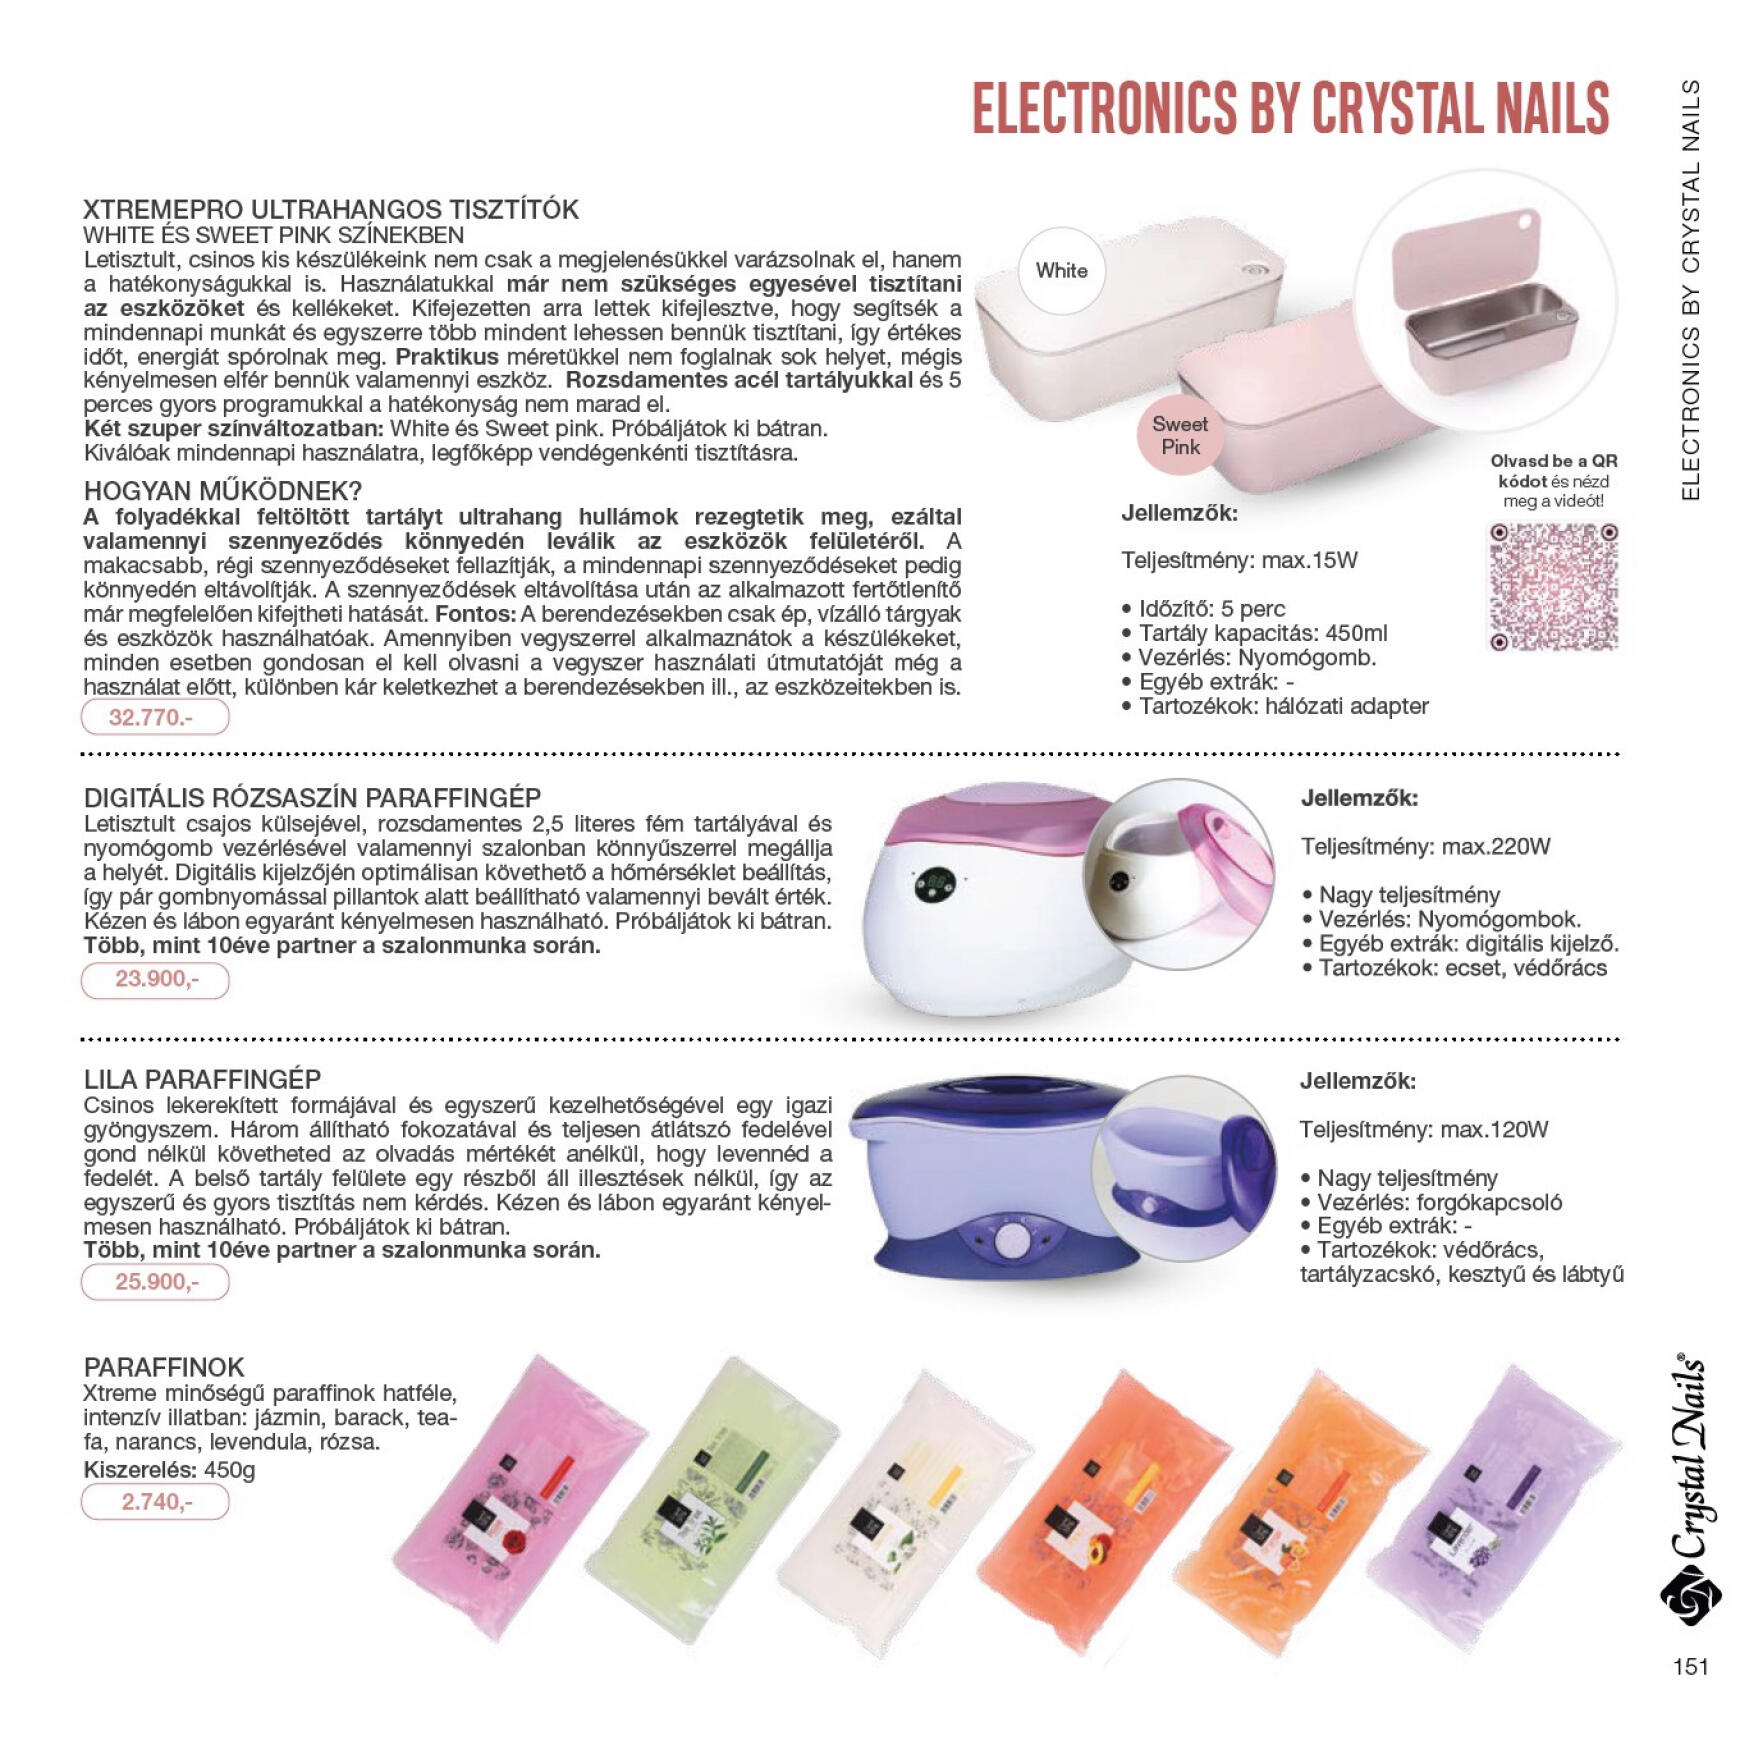 crystal-nails - Aktuális újság Crystal Nails 05.01. - 12.31. - page: 151